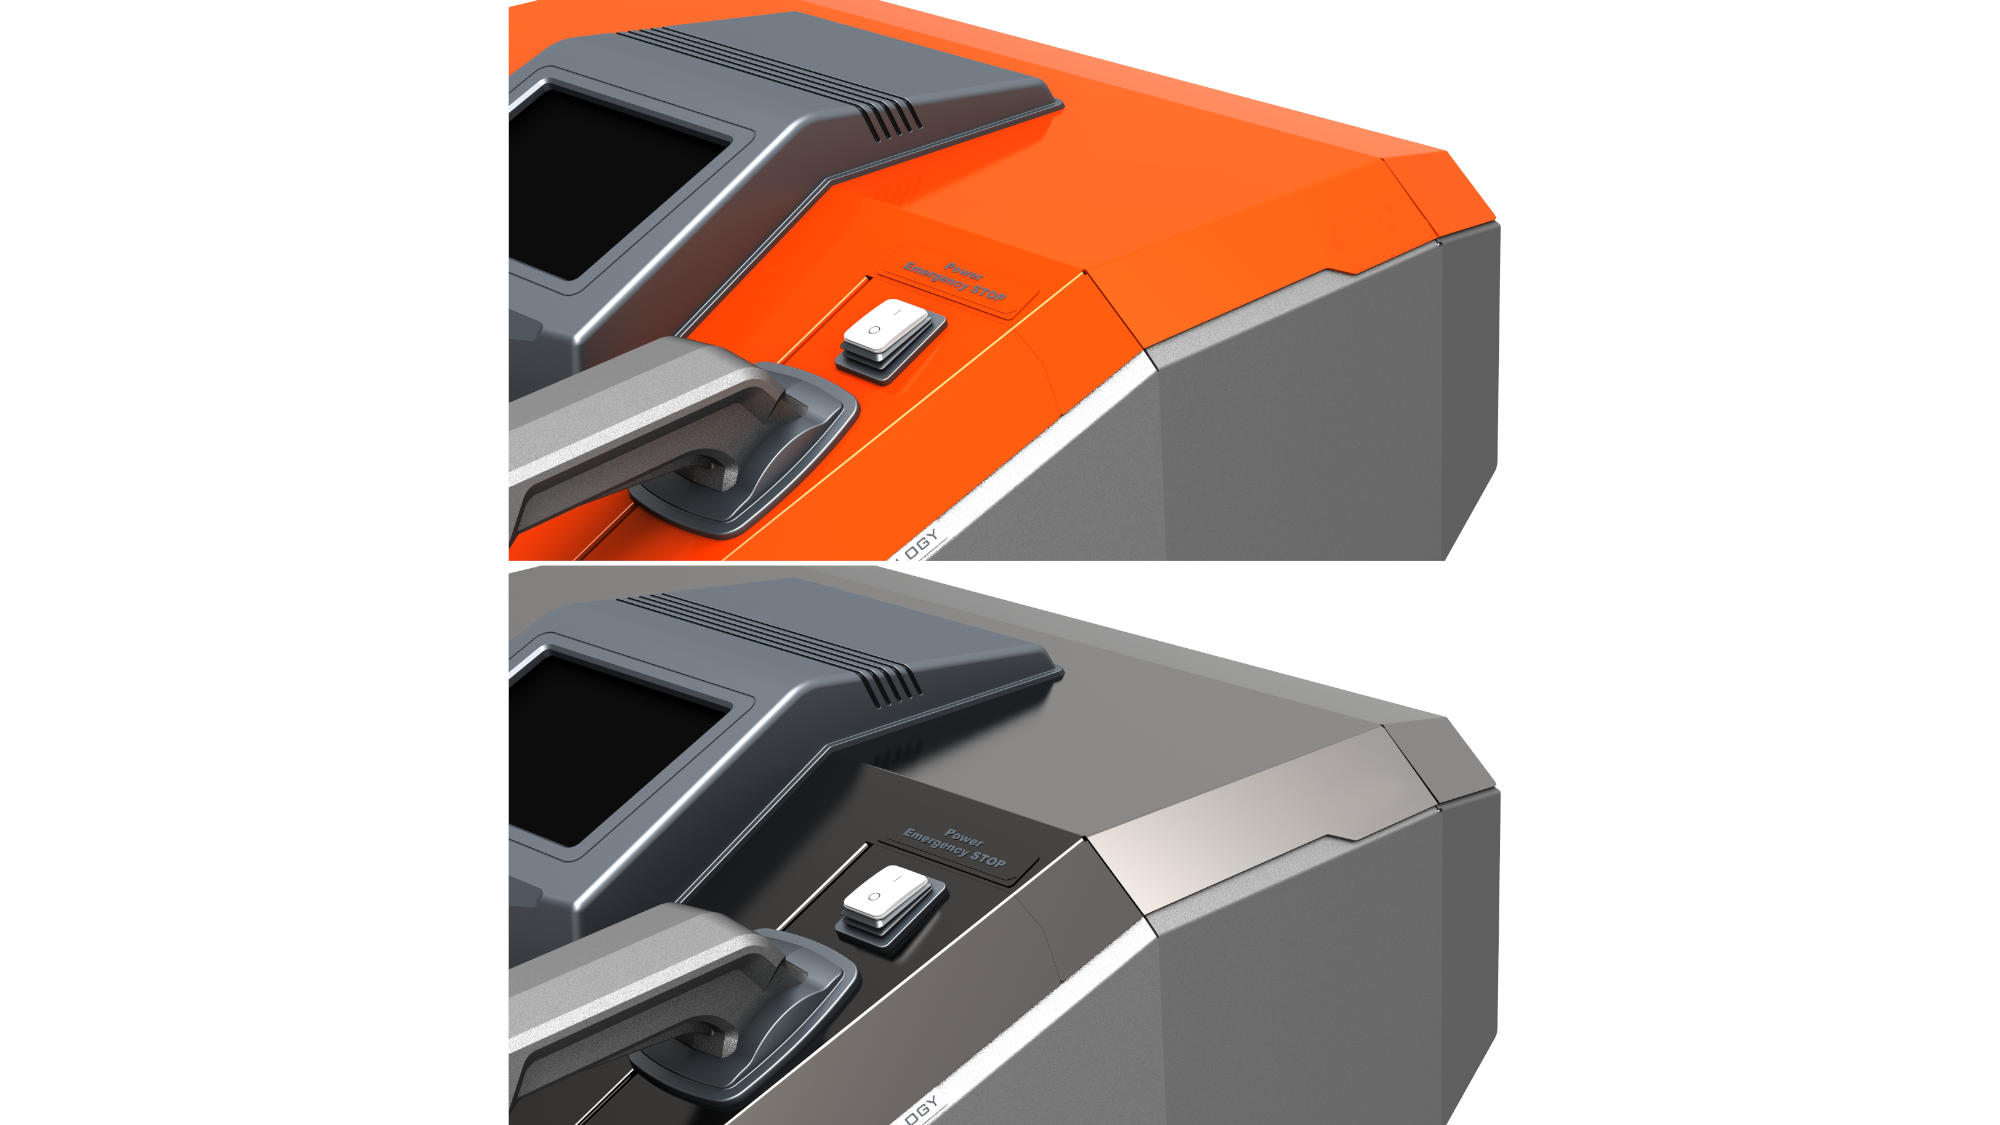 VQ-Typ orange impulse sealer and VIQ-Typ inox impulse sealer